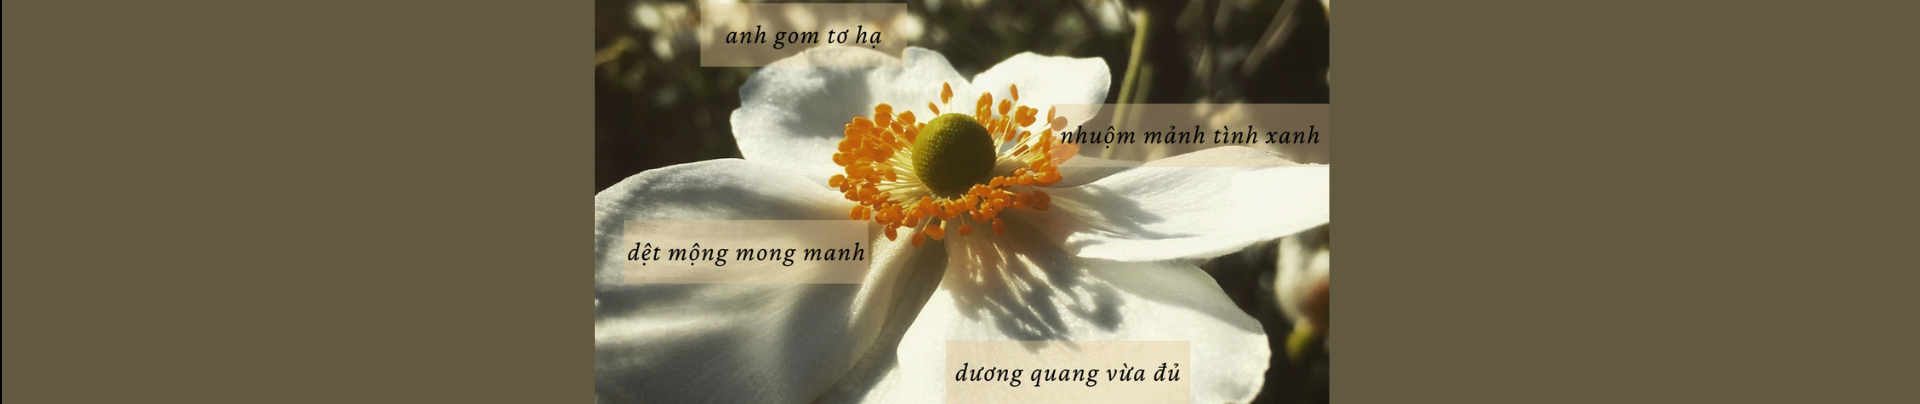 Banner de perfil de Dung Nguyen